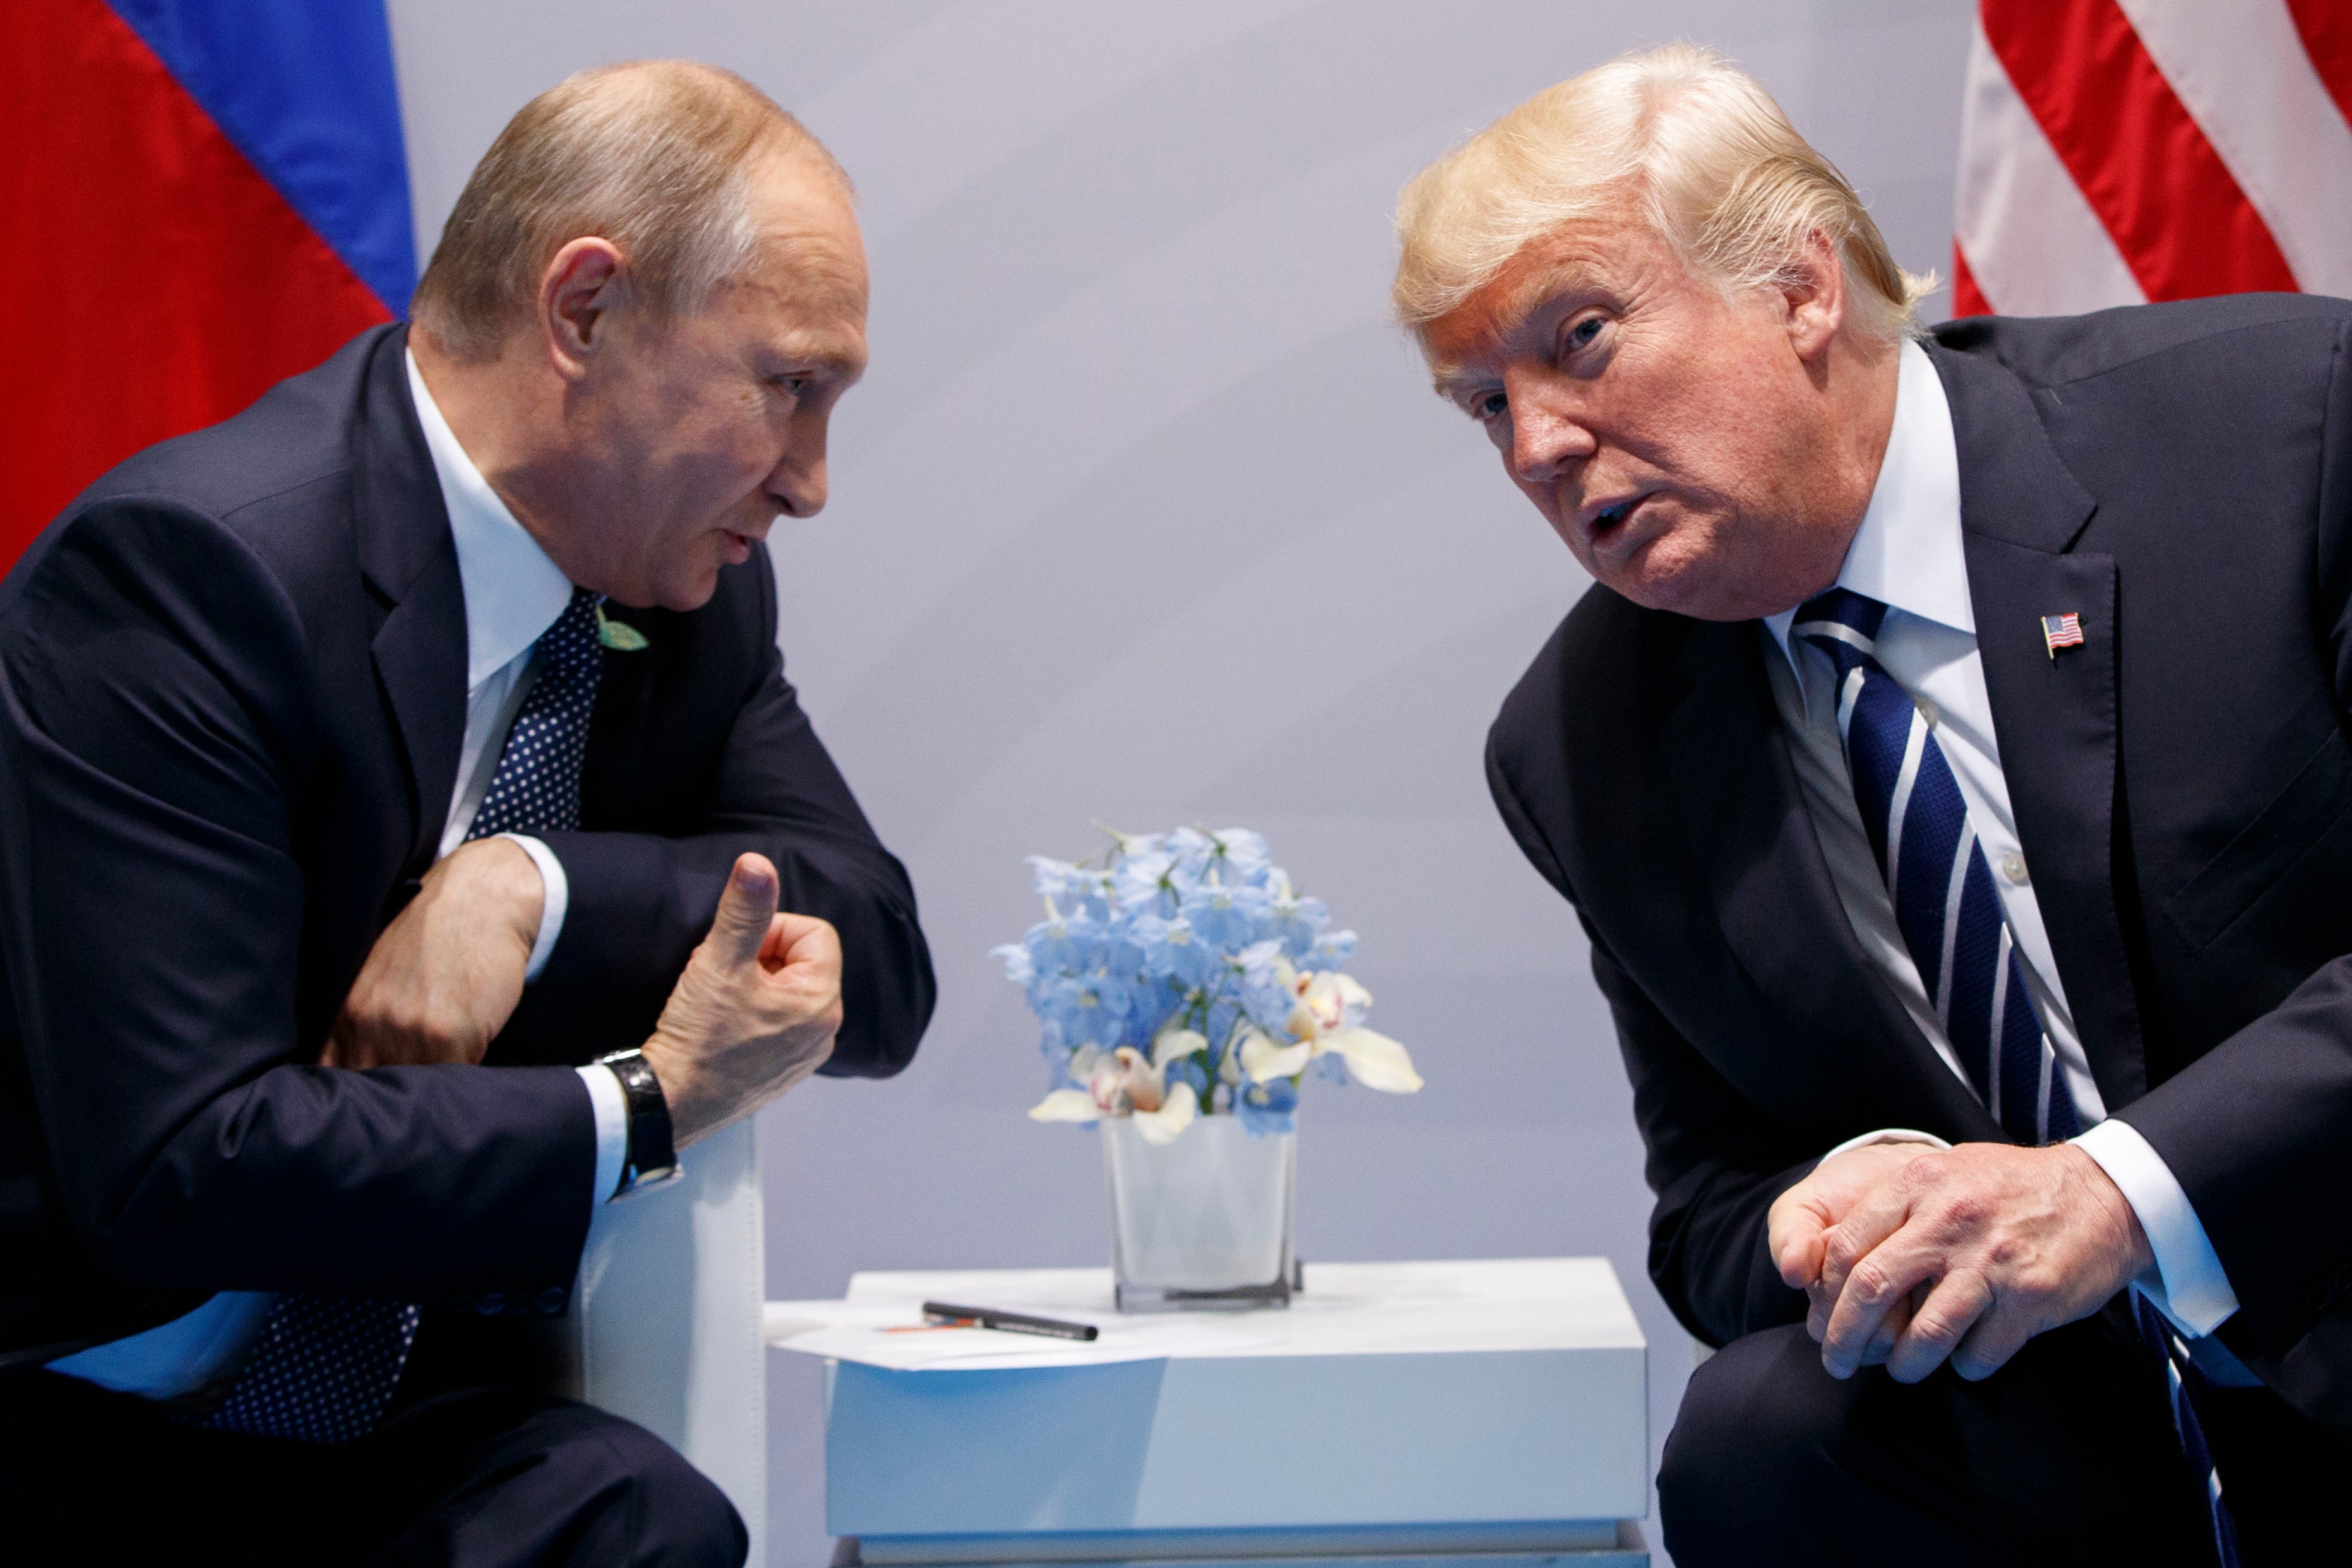 Donald Trump speaks to Russian president Vladimir Putin at the G20 summit in Hamburg, in July 2017